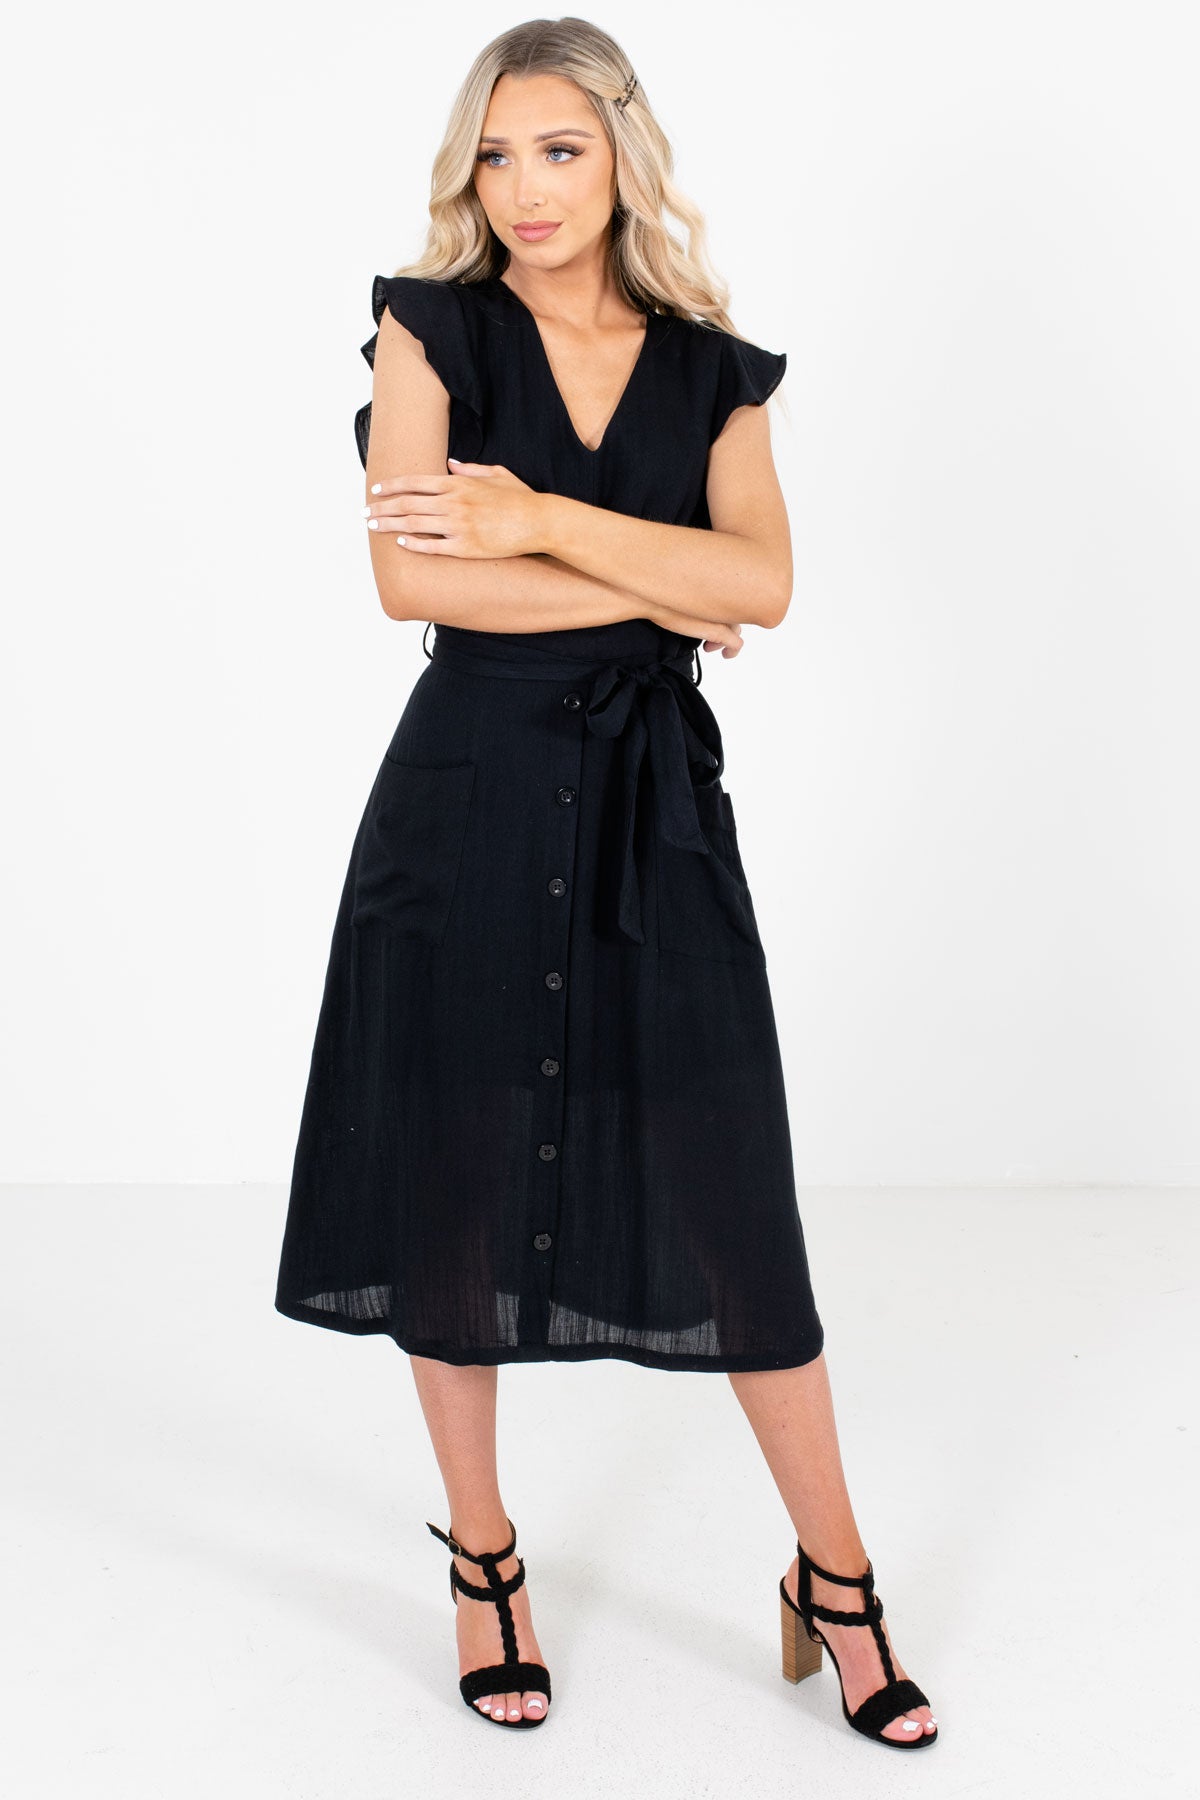 Black Cute and Comfortable Boutique Midi Dresses for Women